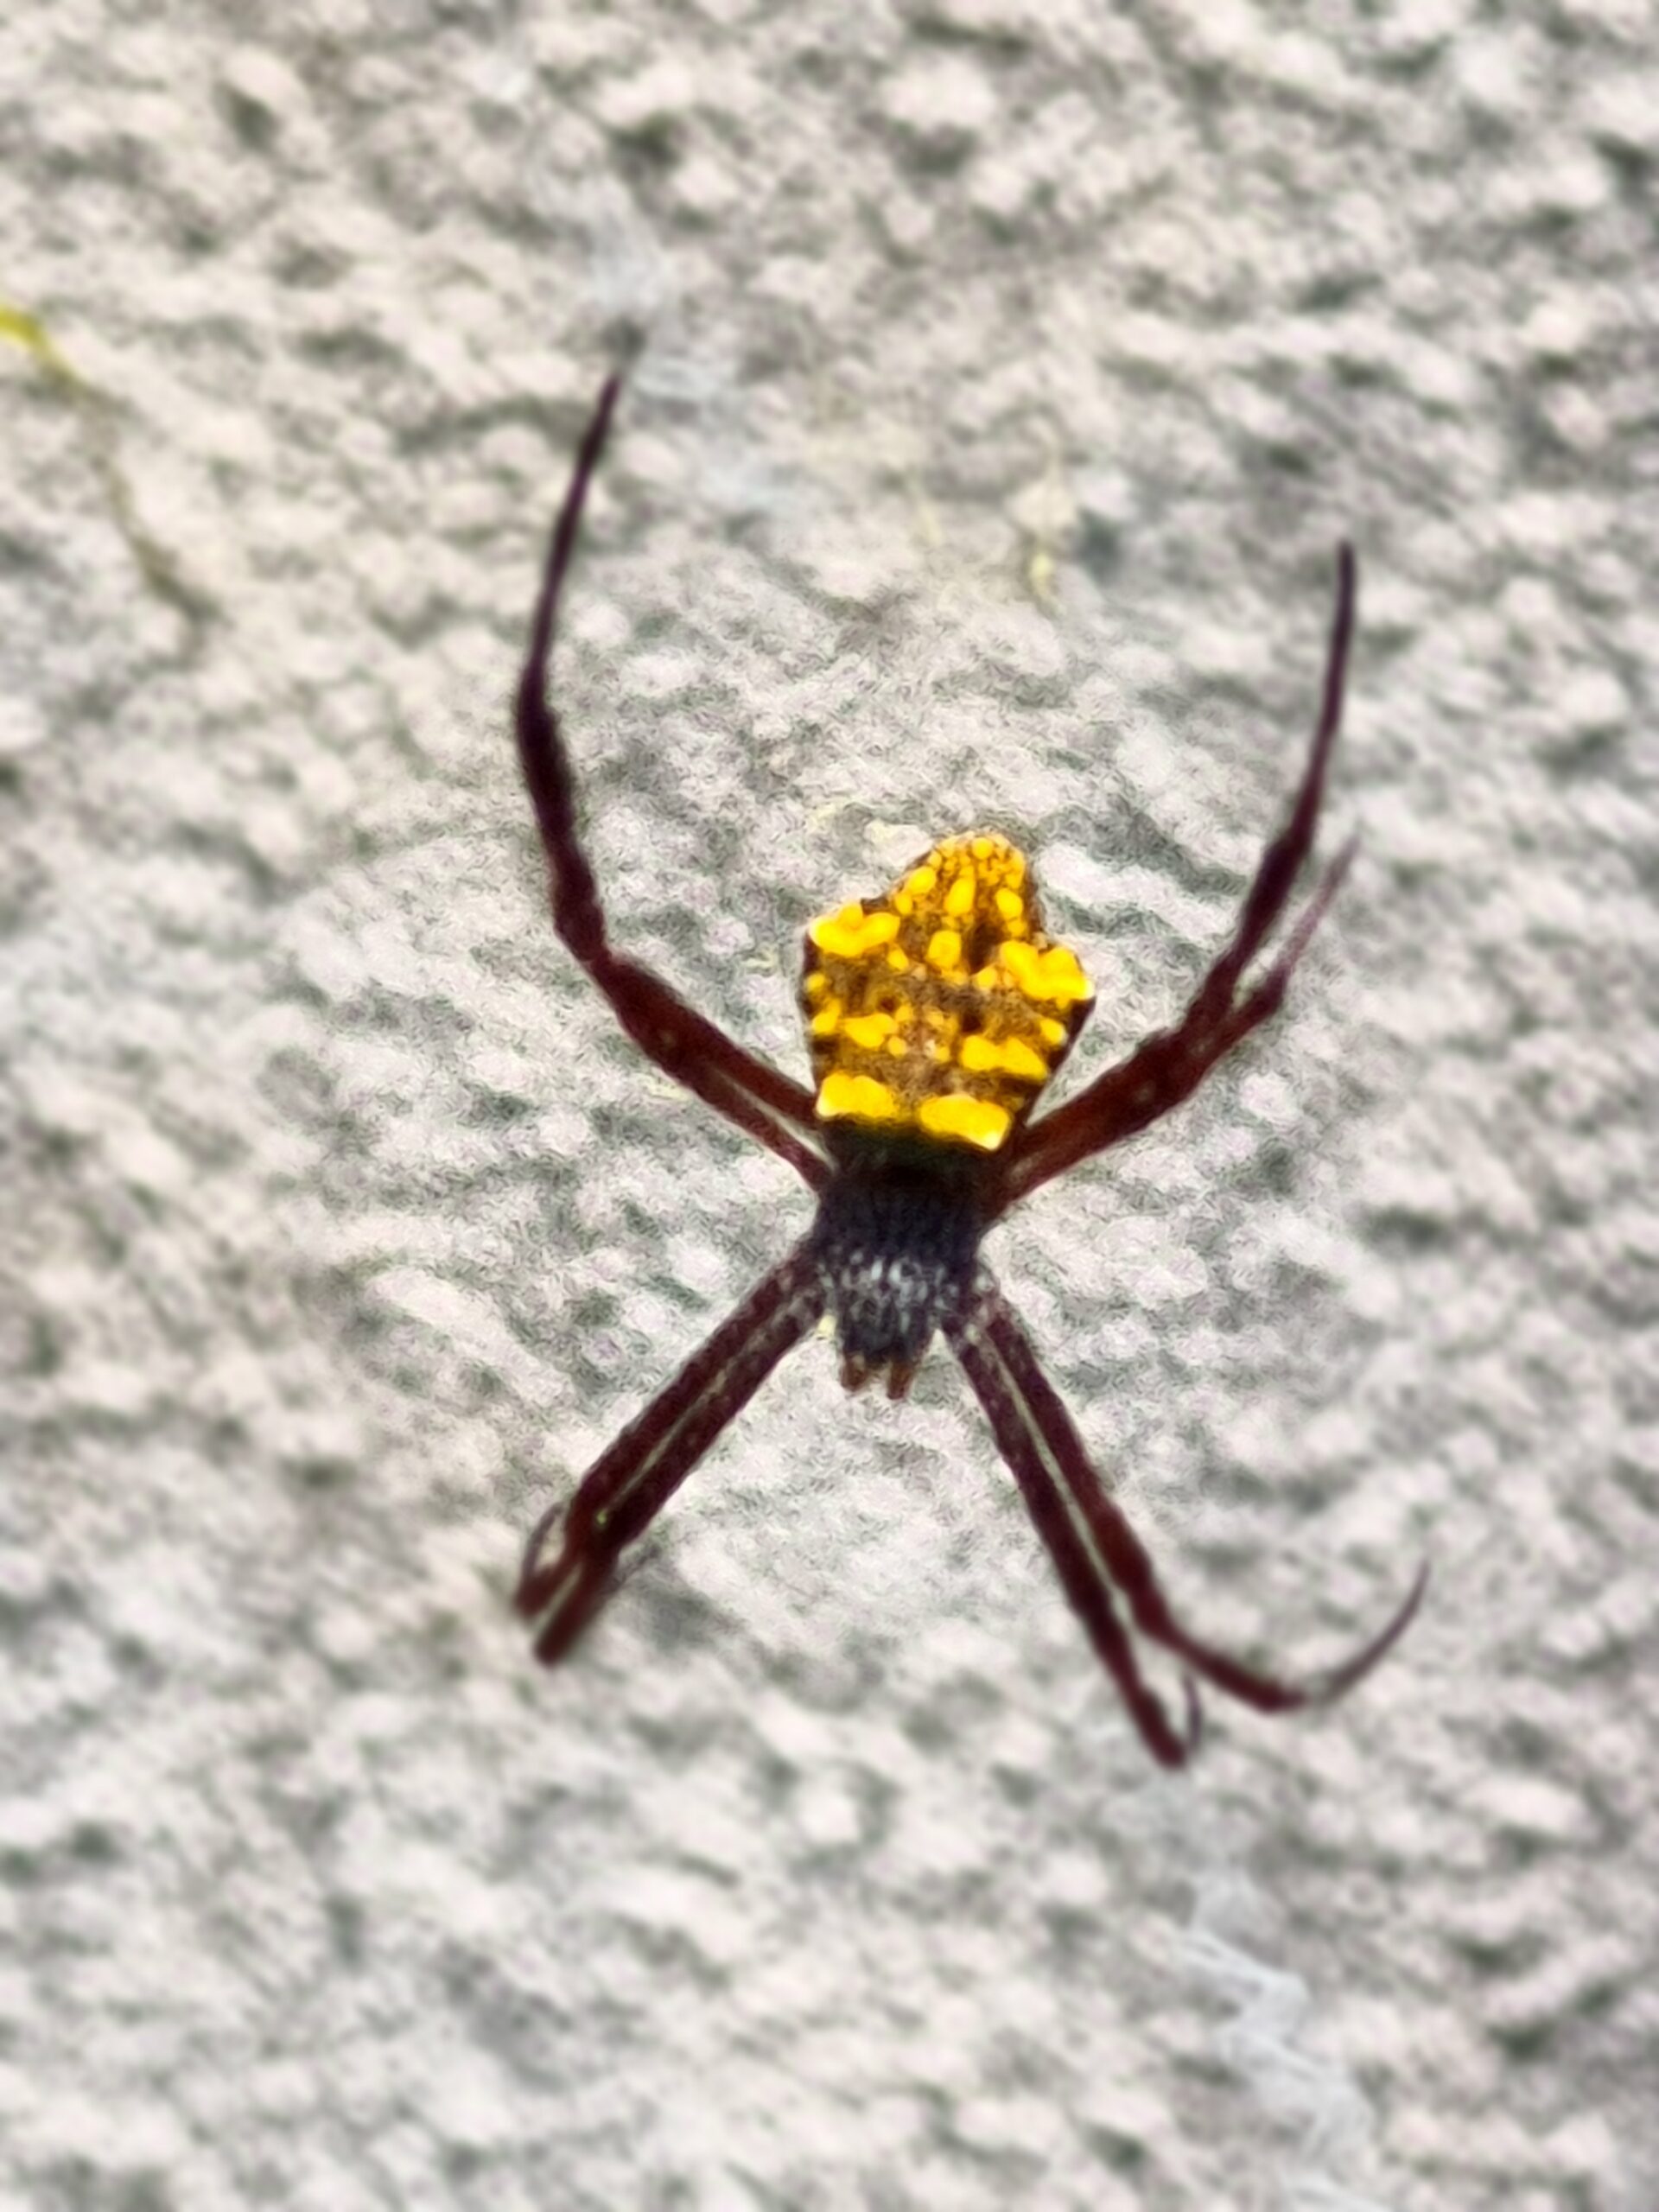 Picture of Argiope appensa (Hawaiian Garden Spider)